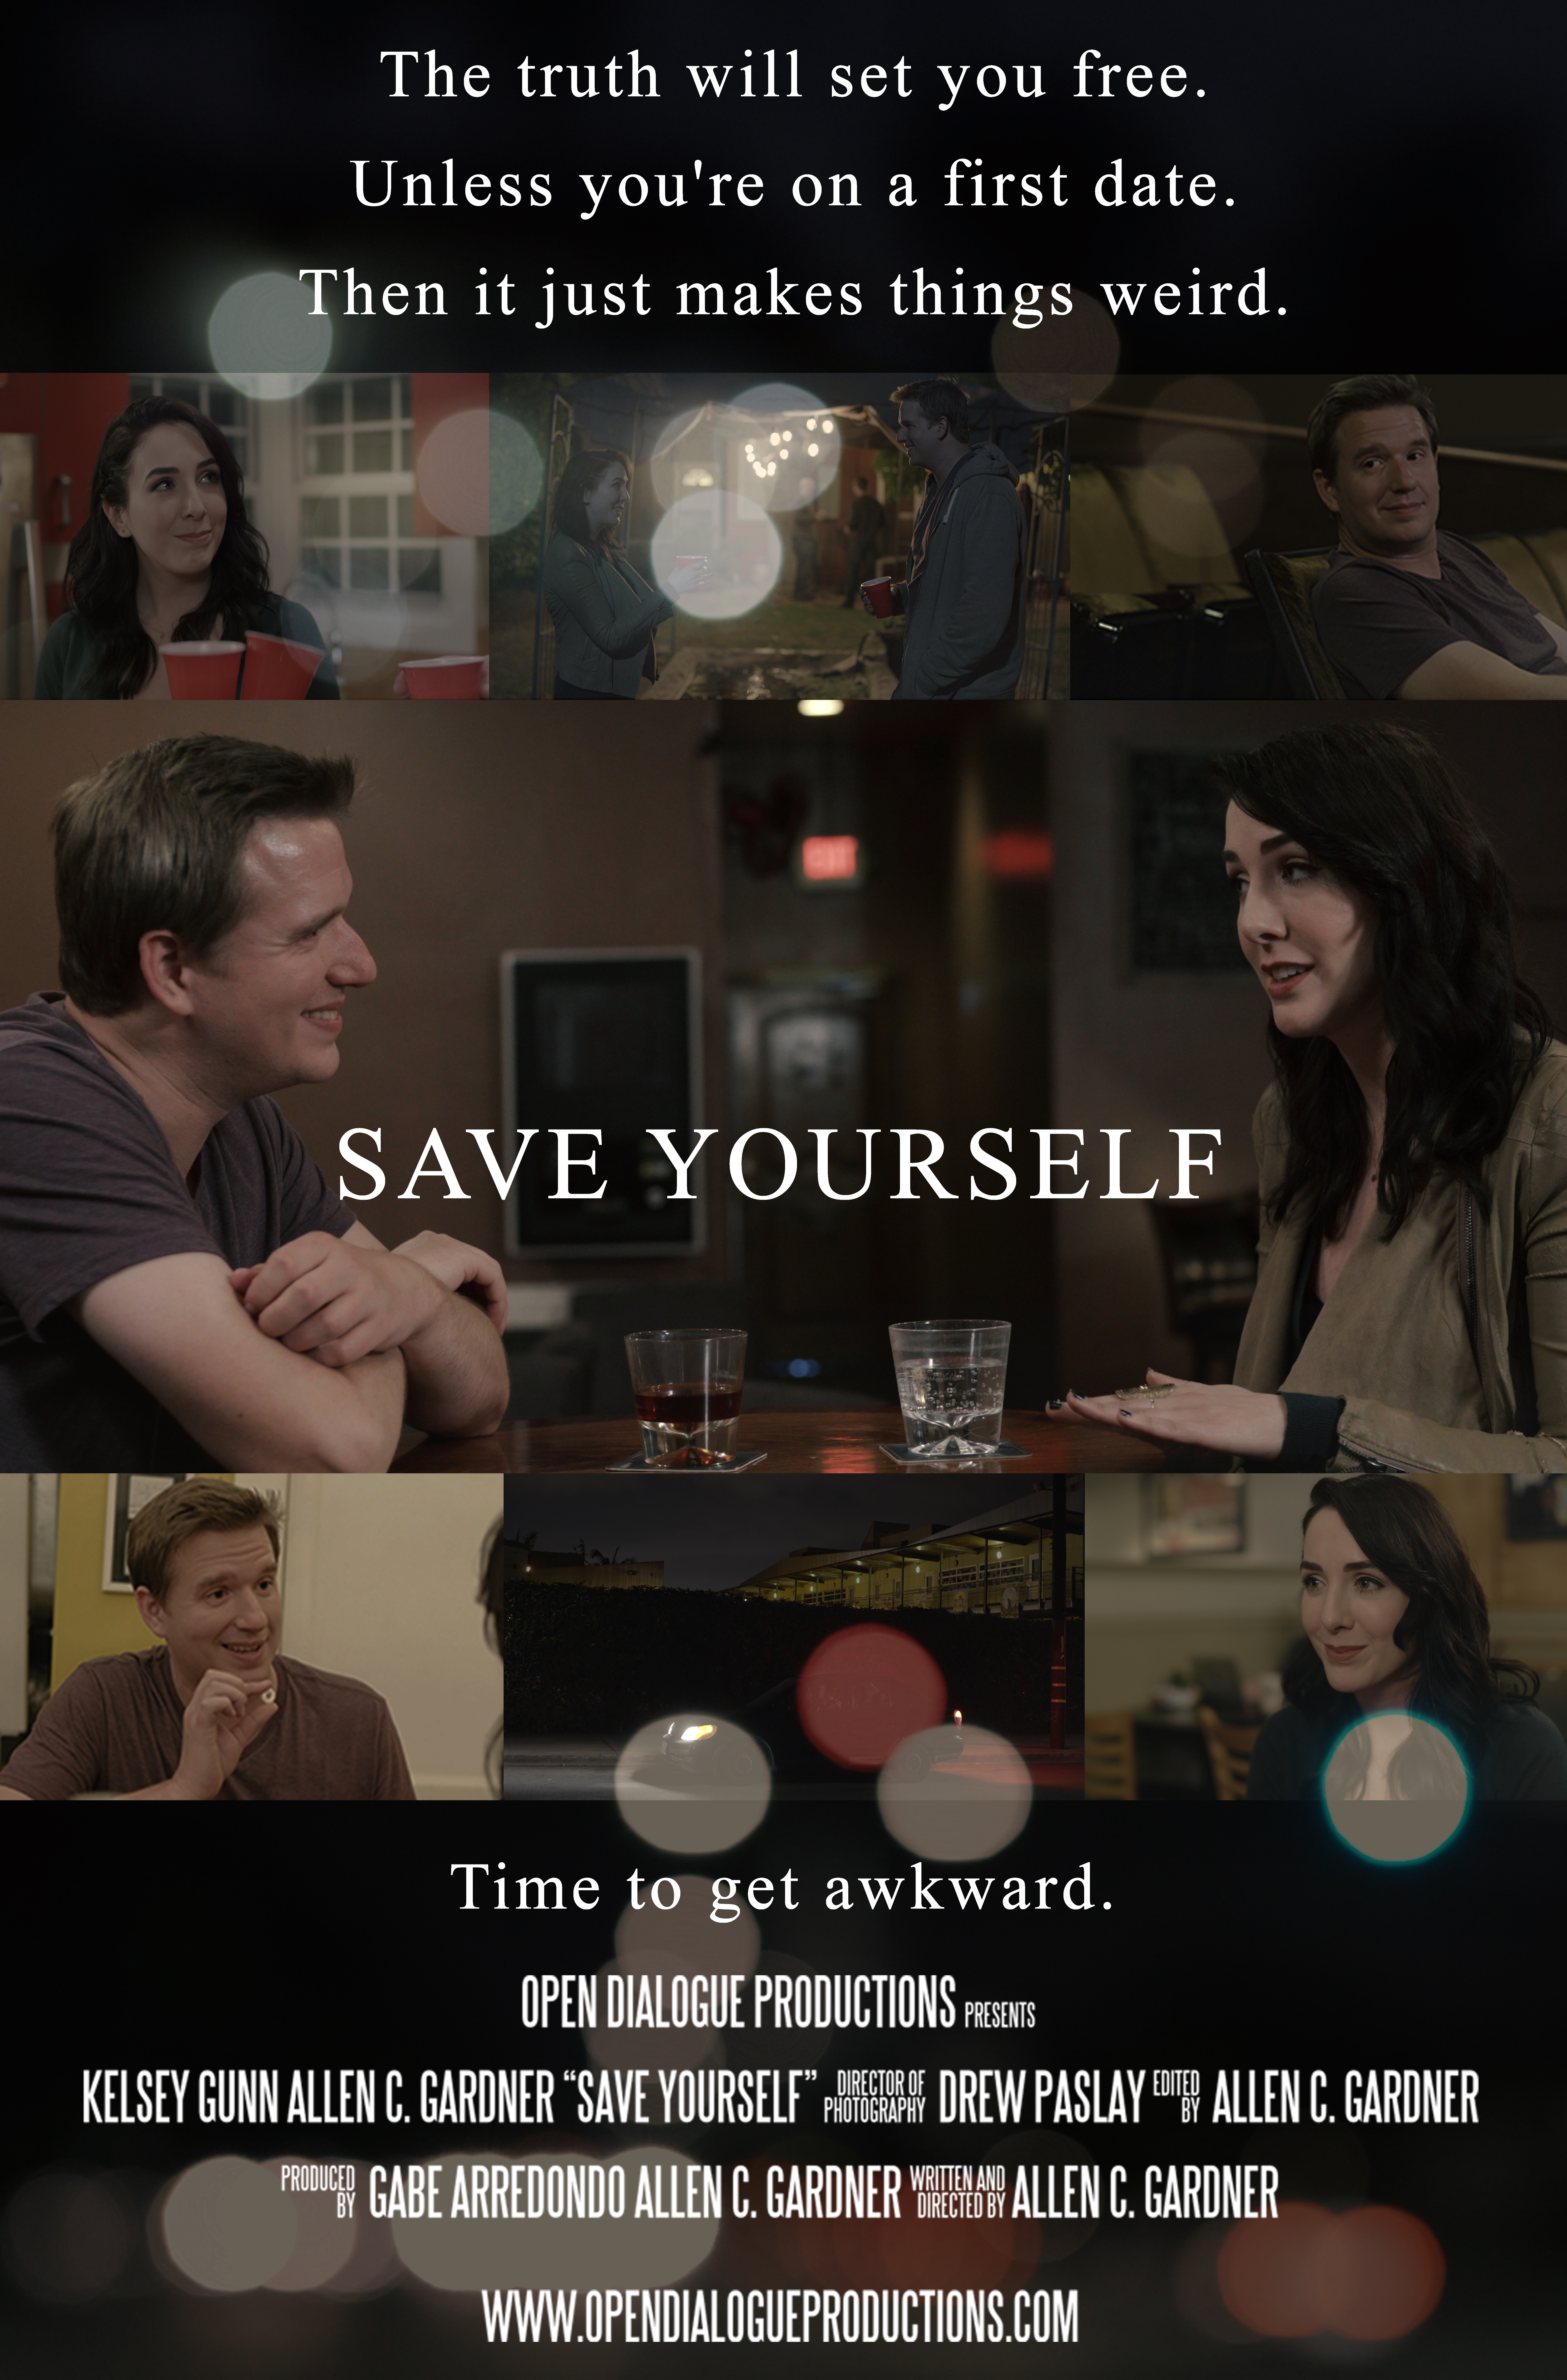 Save Yourself (2018)